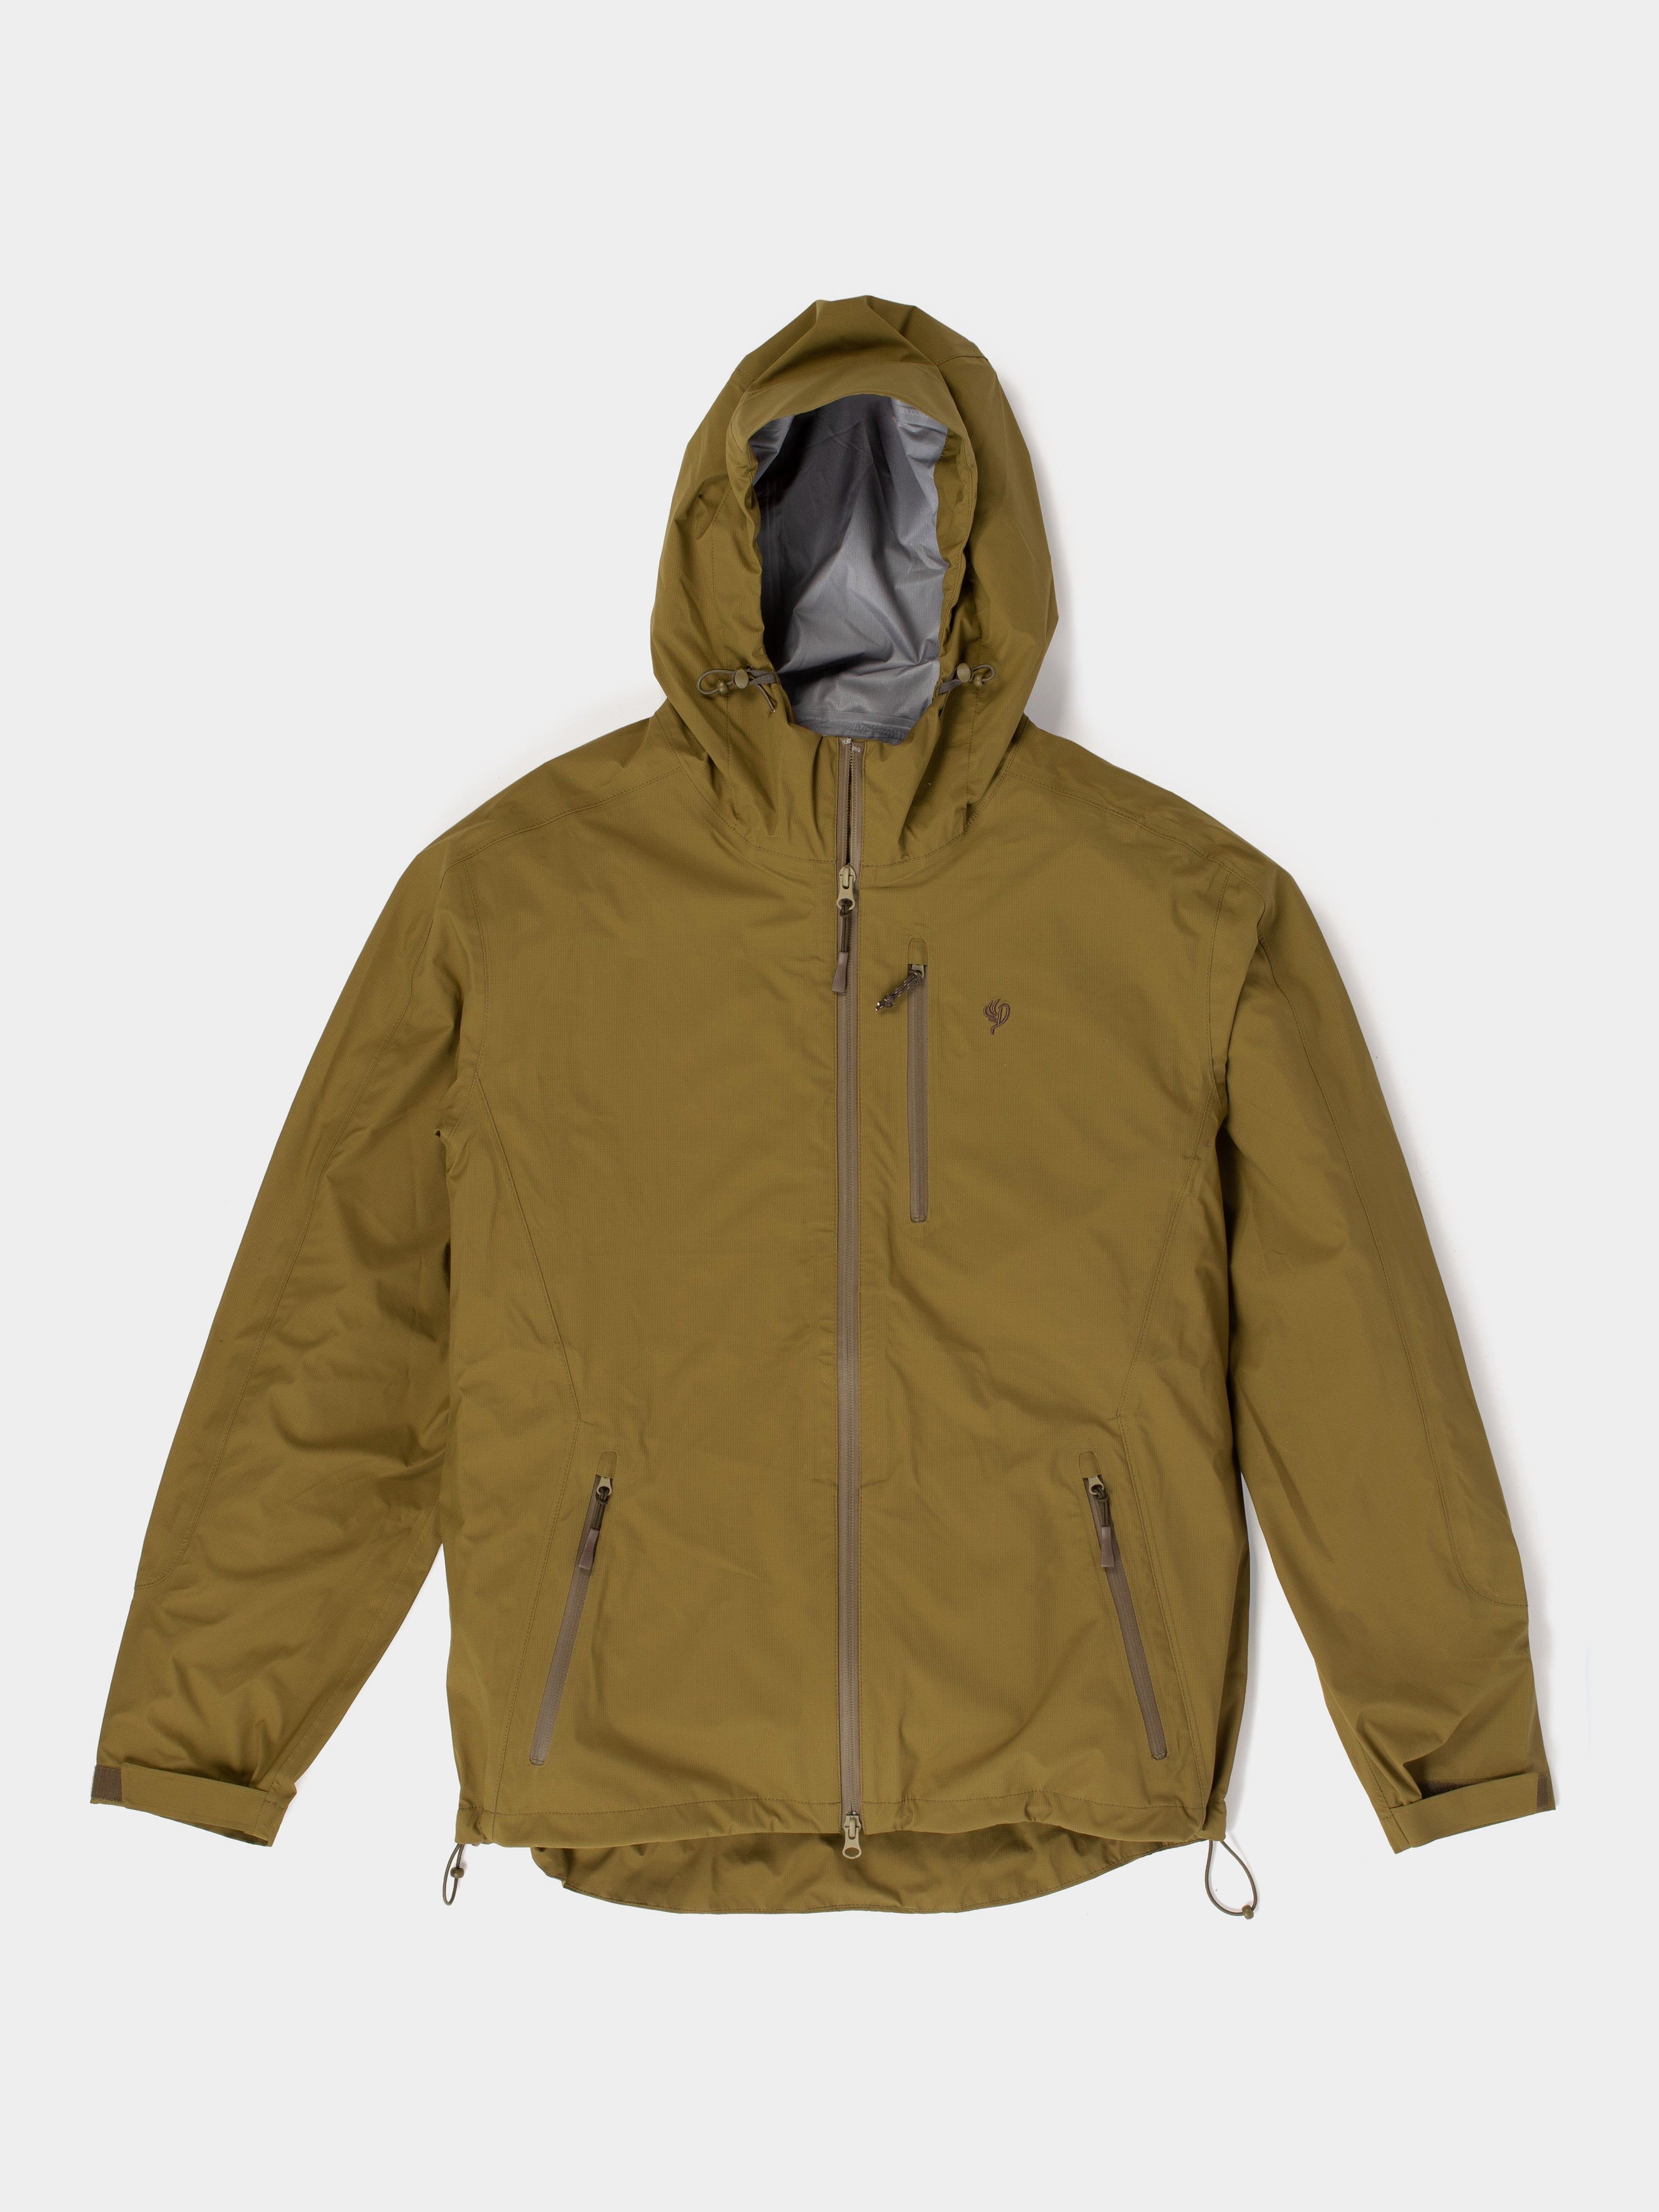 ALIKKA Sports Jackets for Men Summer Exploration Camping Raincoat